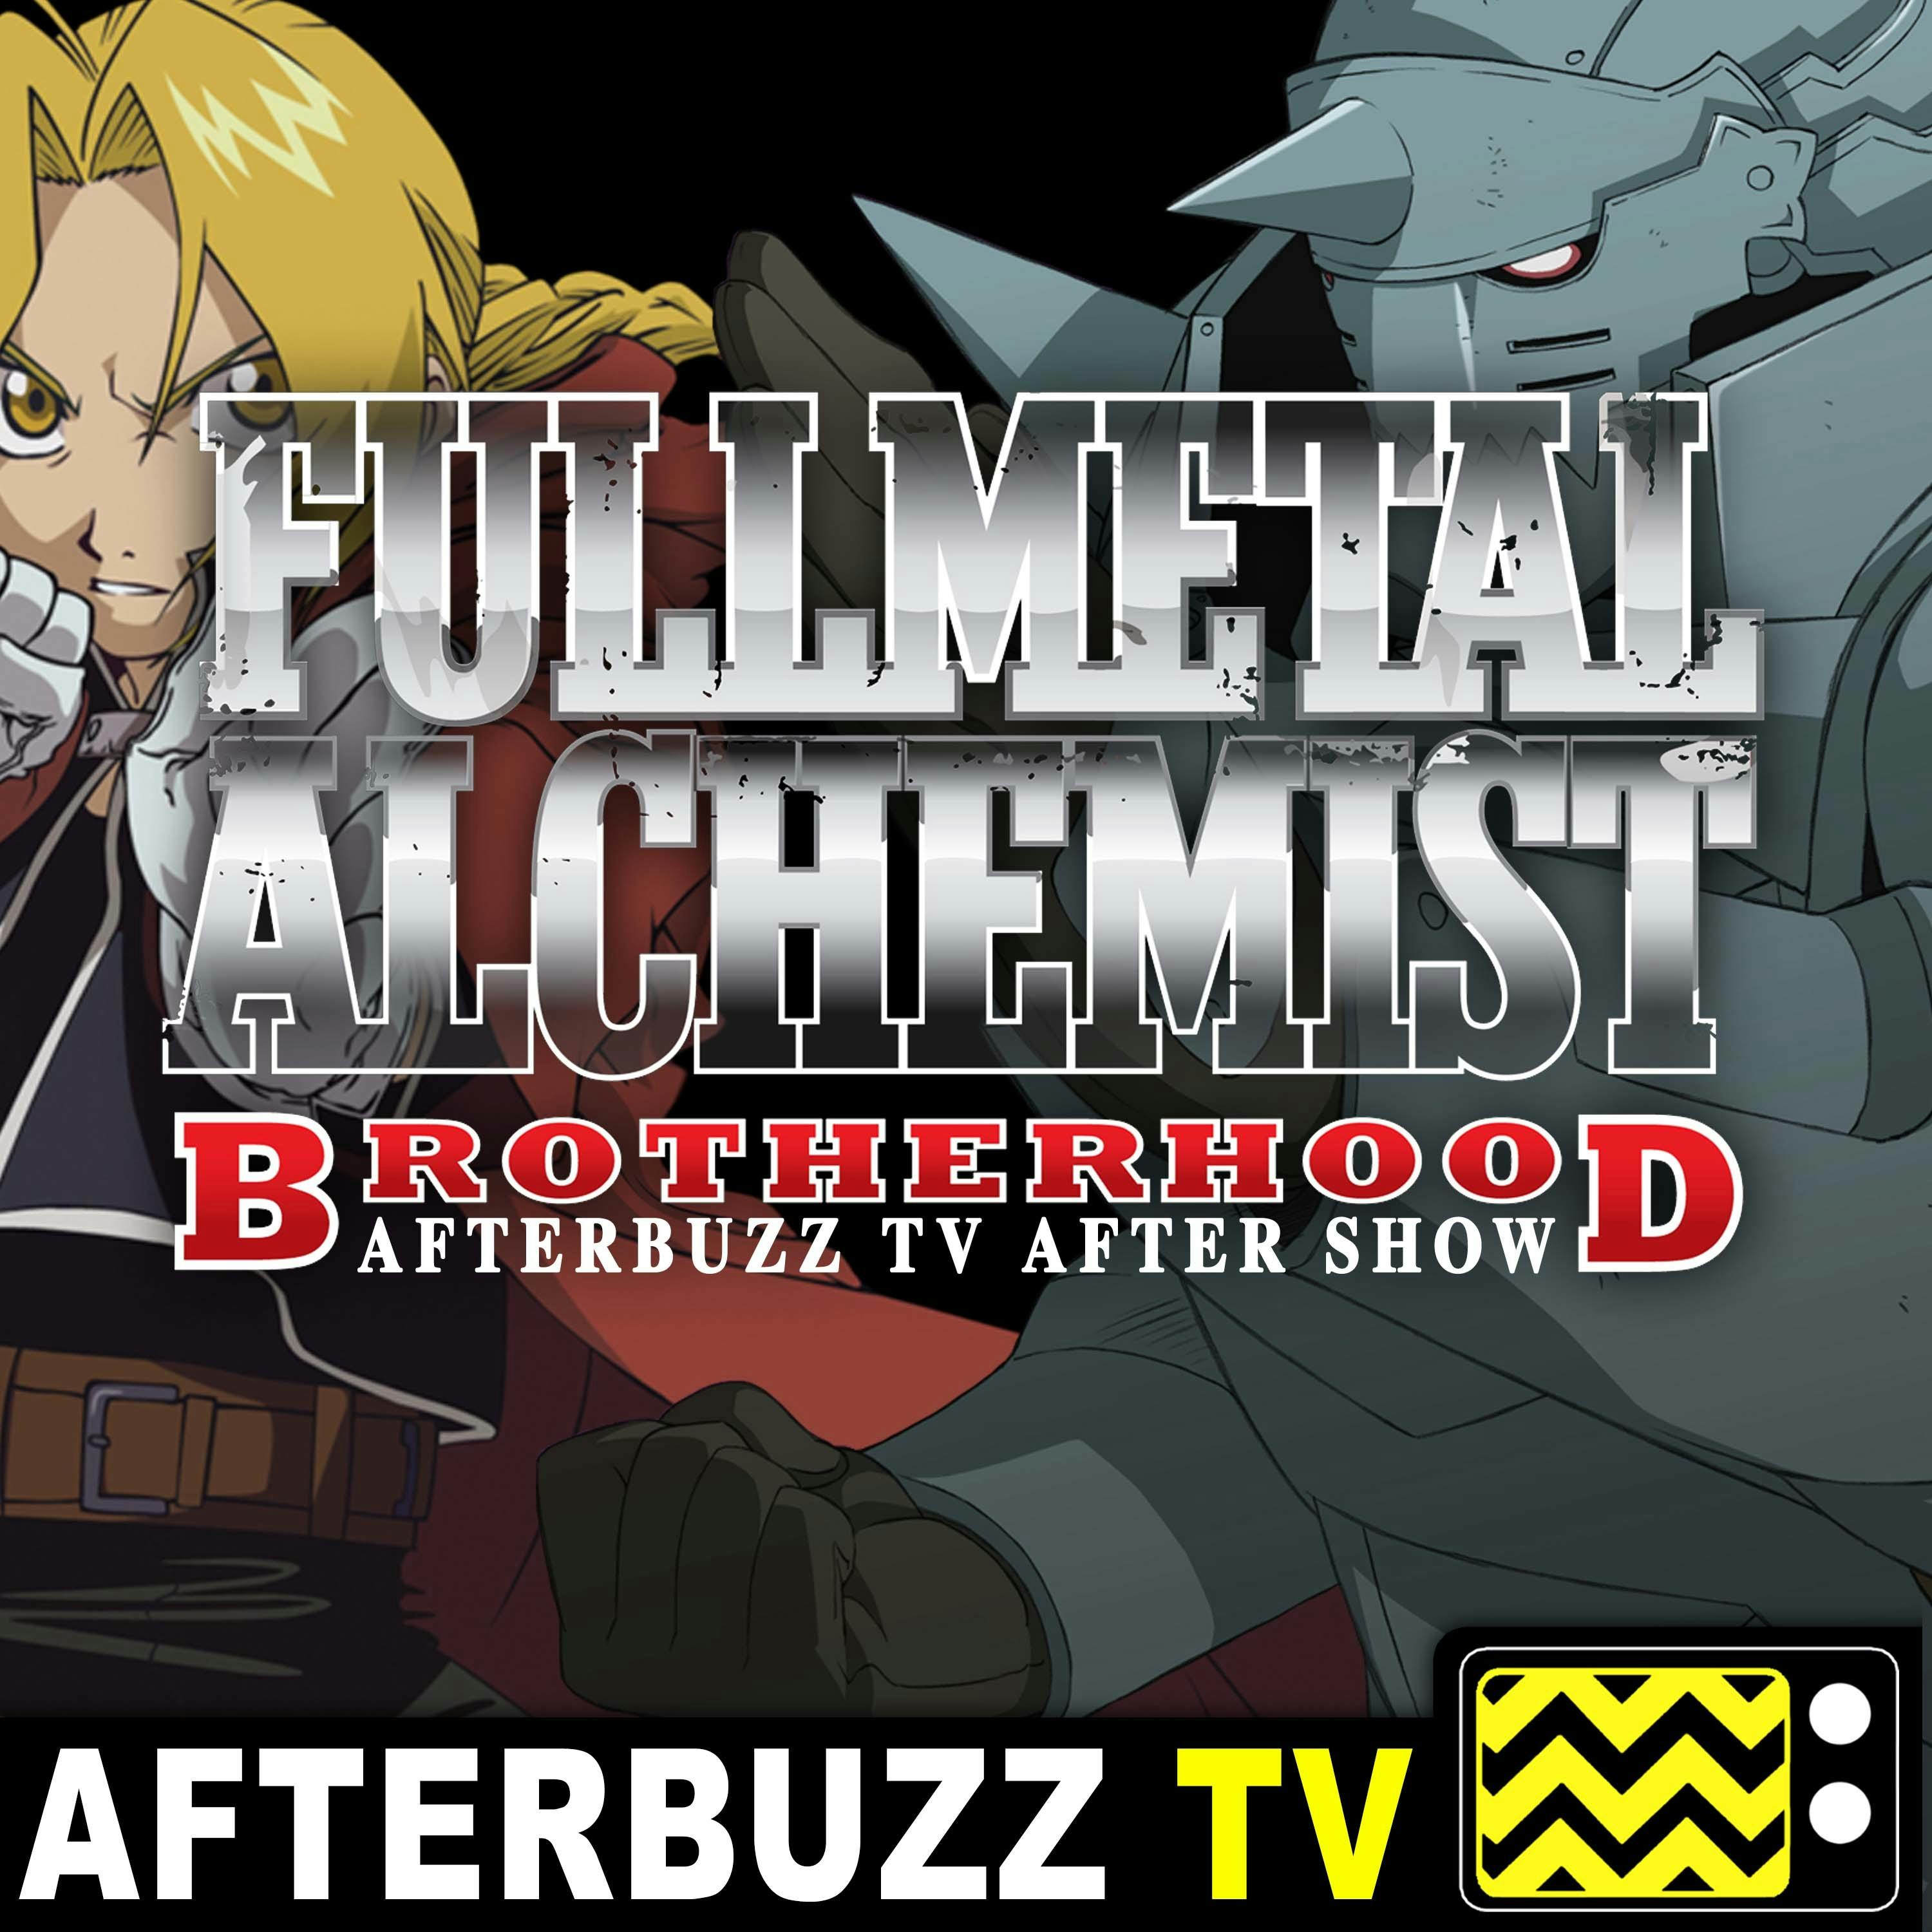 Fullmetal Alchemist: Brotherhood S:5 | Episodes 9 – 12 | AfterBuzz TV AfterShow